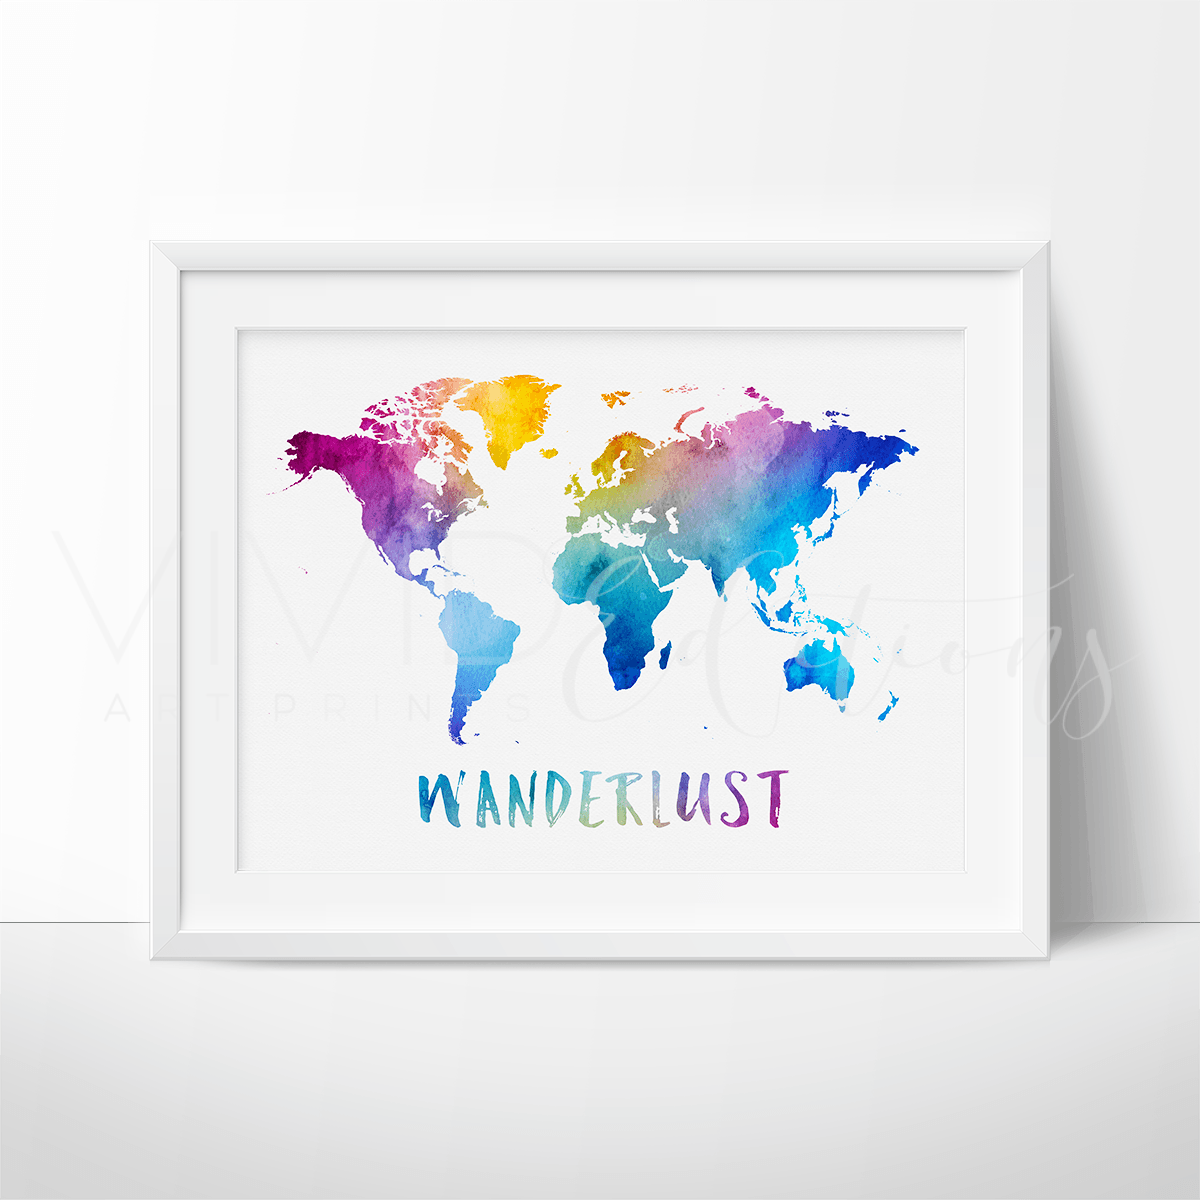 Wanderlust, Travel Quote World Map Watercolor Art Print Print - VividEditions